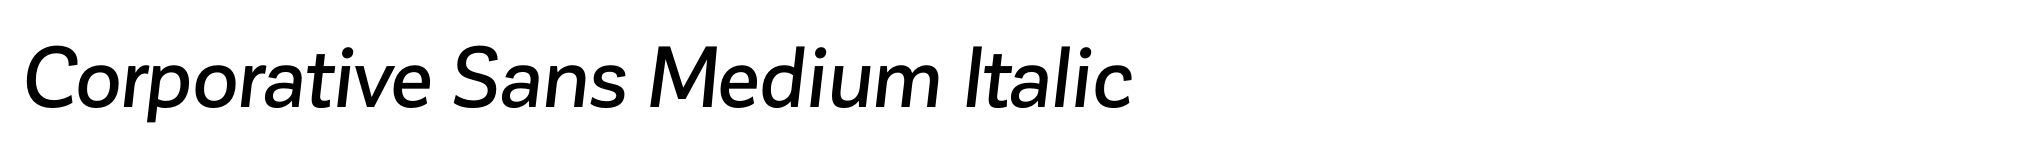 Corporative Sans Medium Italic image